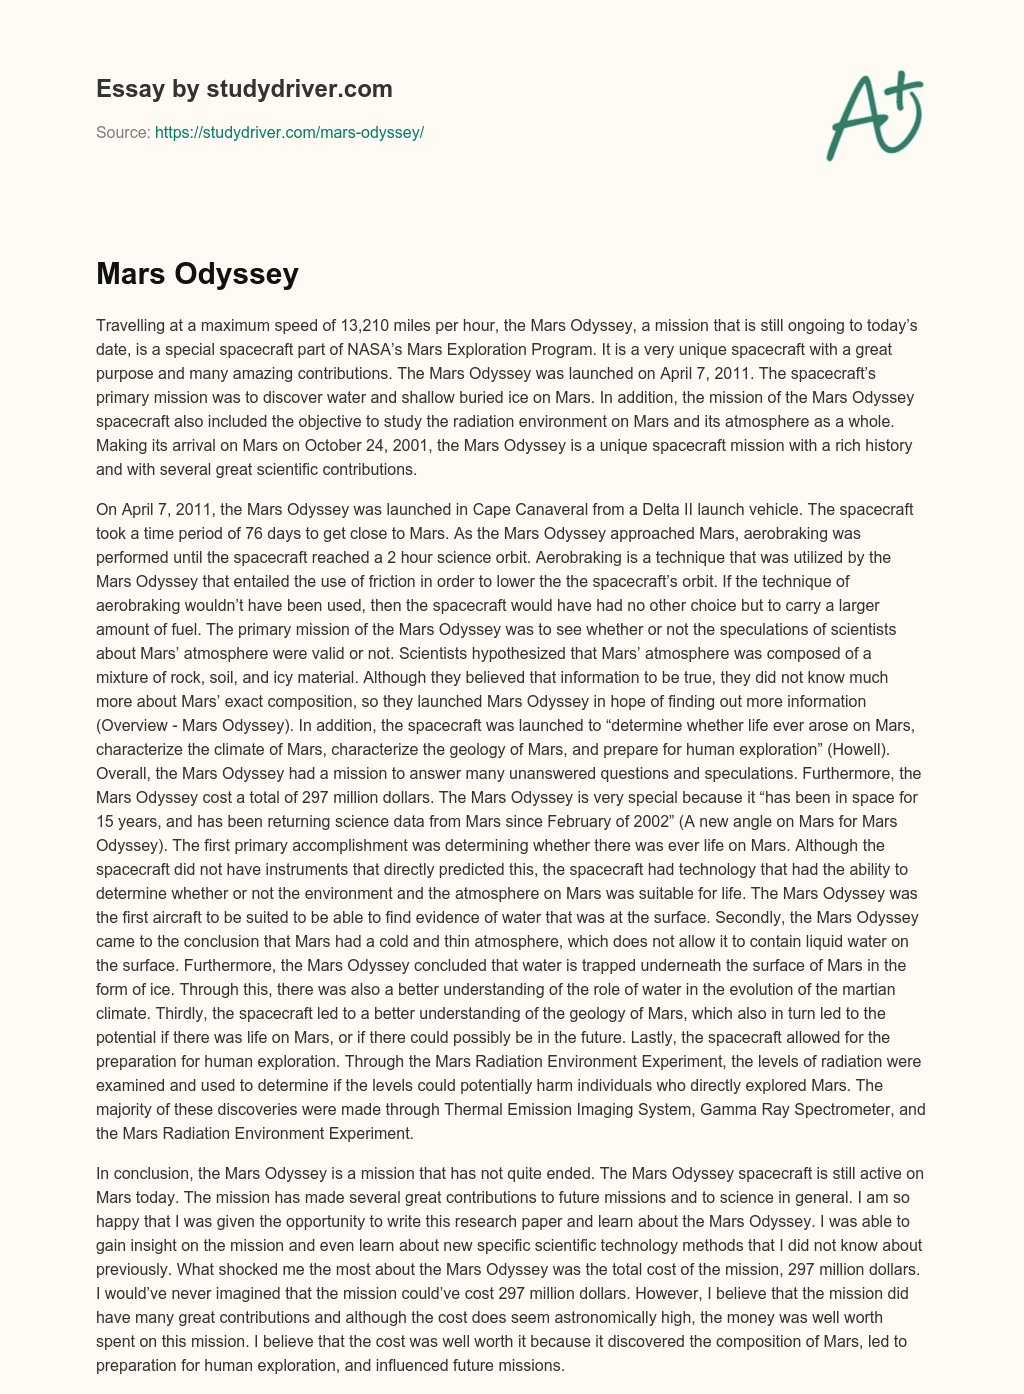 Mars Odyssey essay